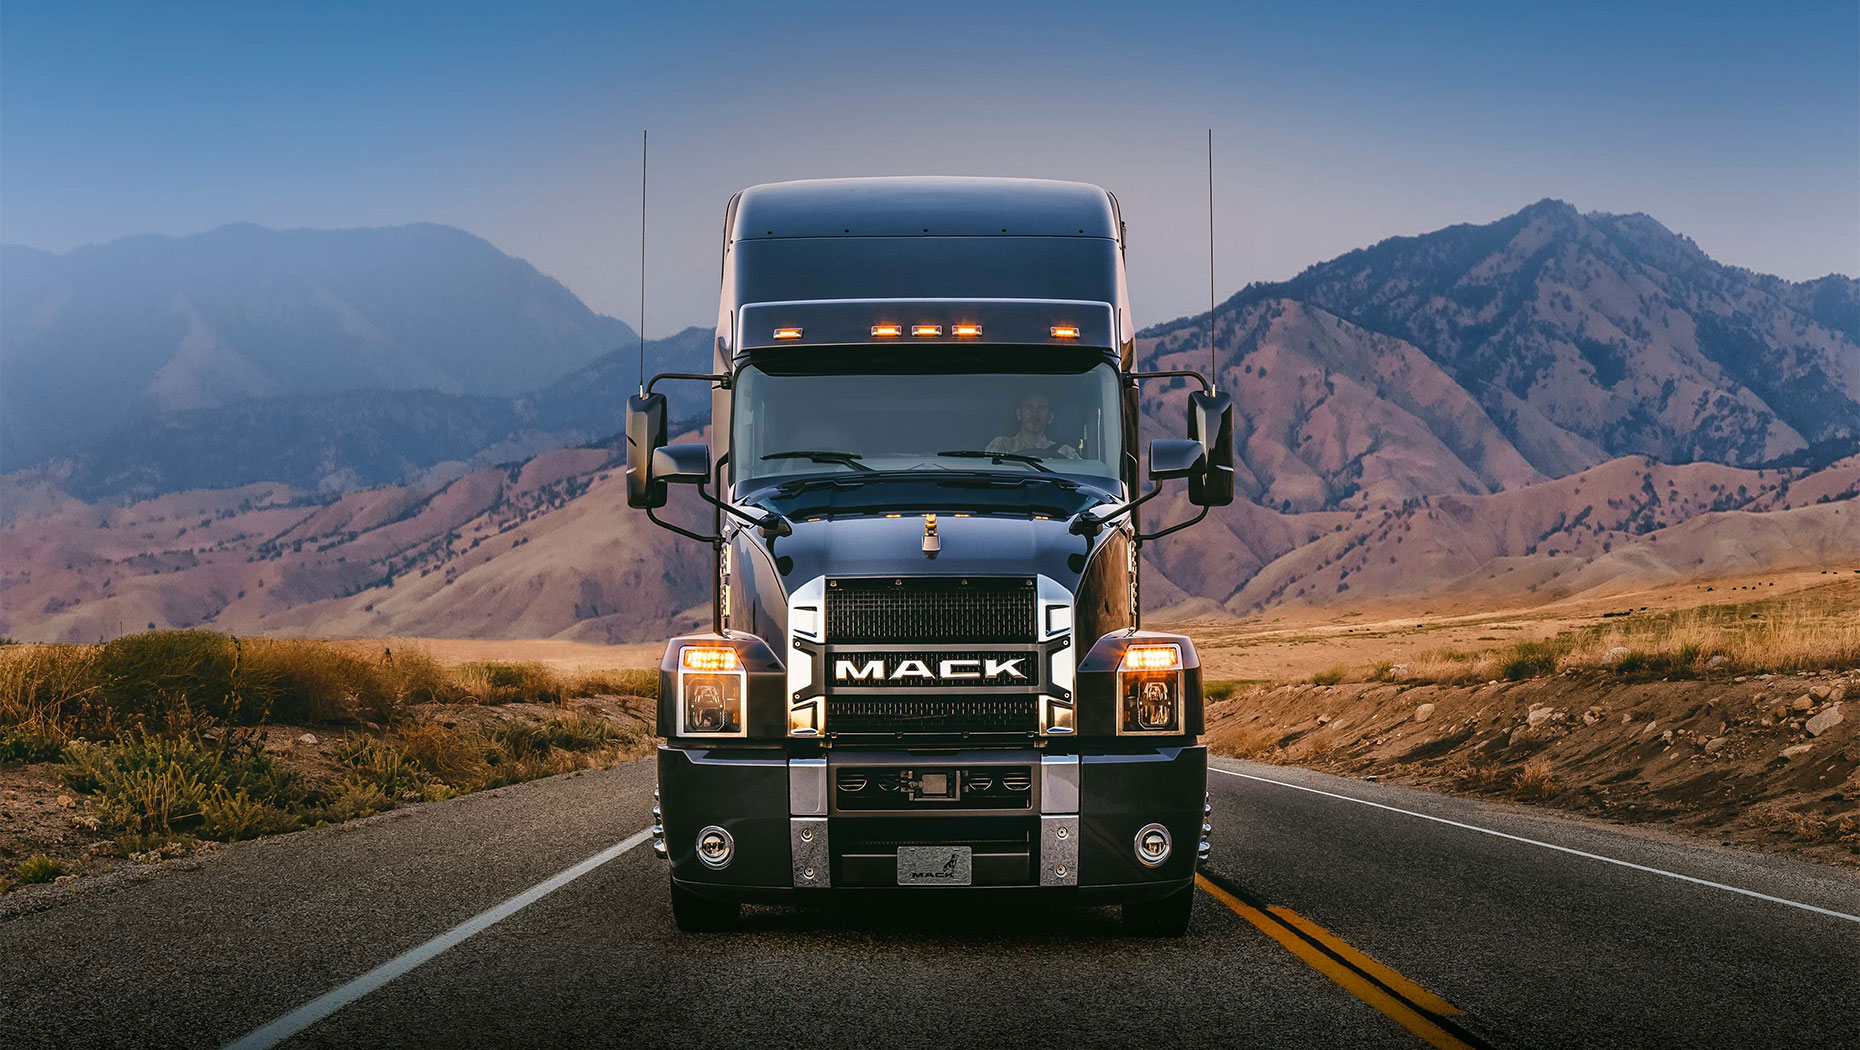 mack truck logo wallpaper